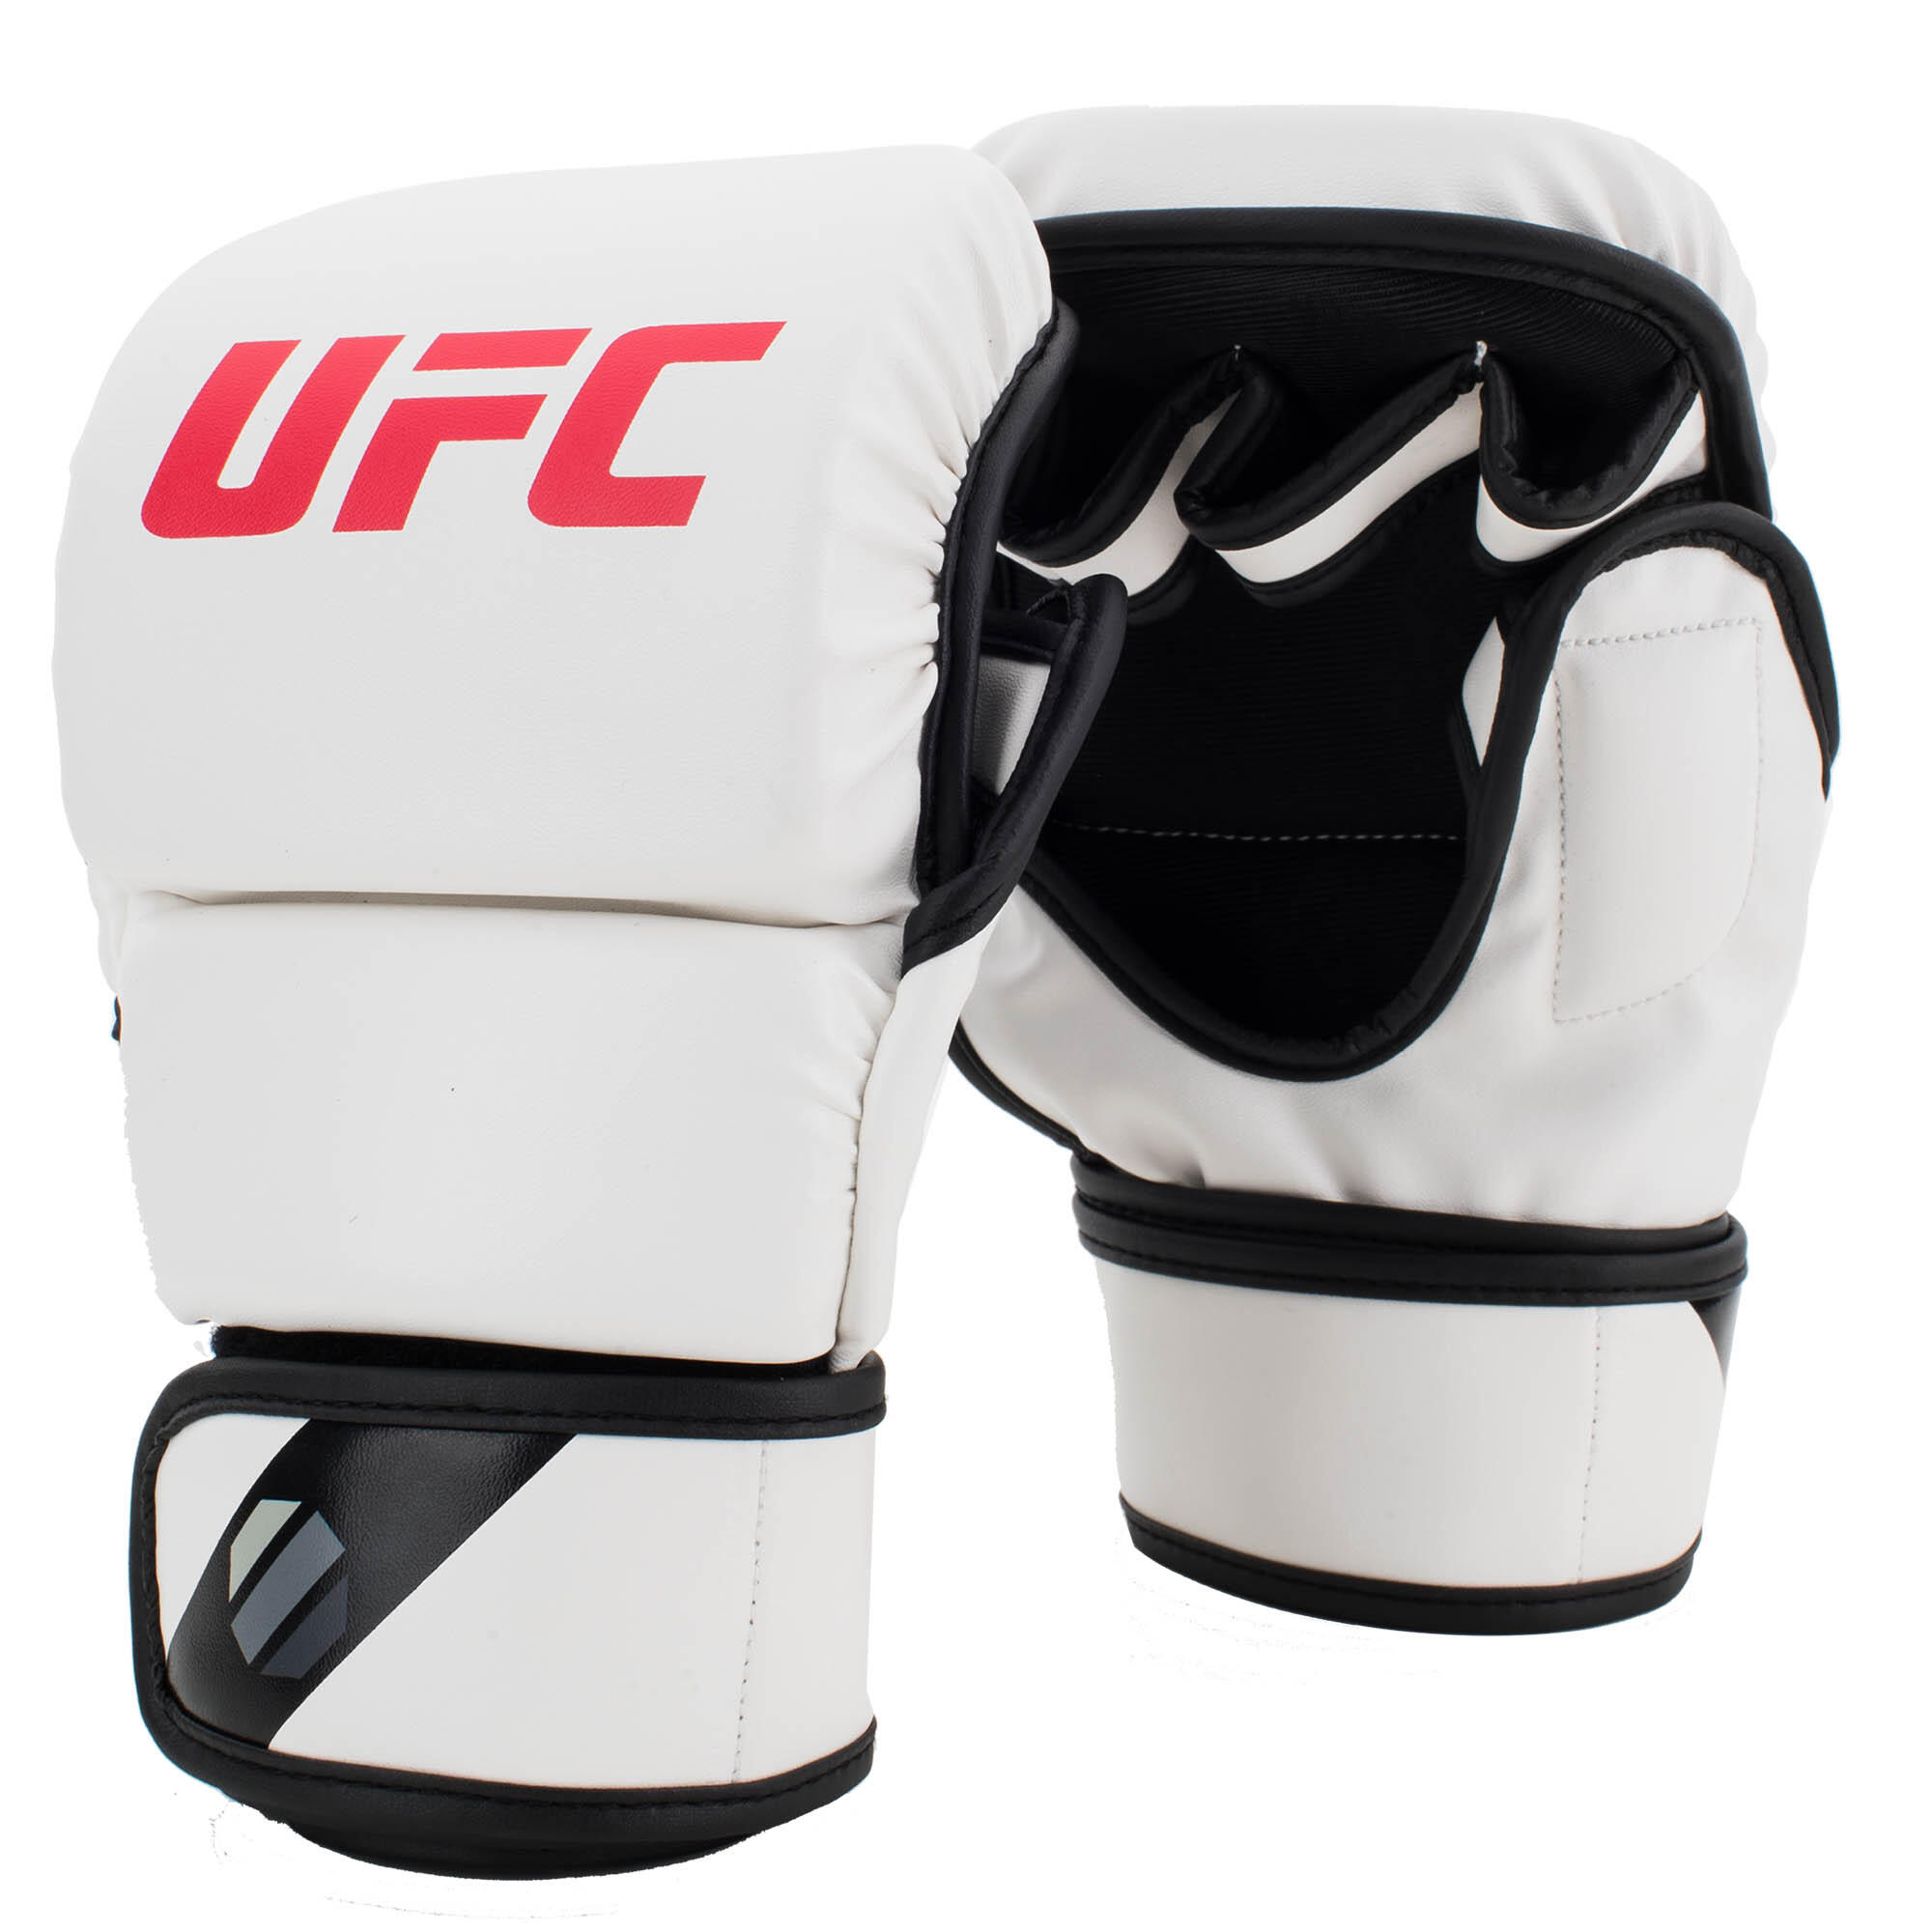 UFC UFC MMA 8oz Sparring Gloves - White - S/M